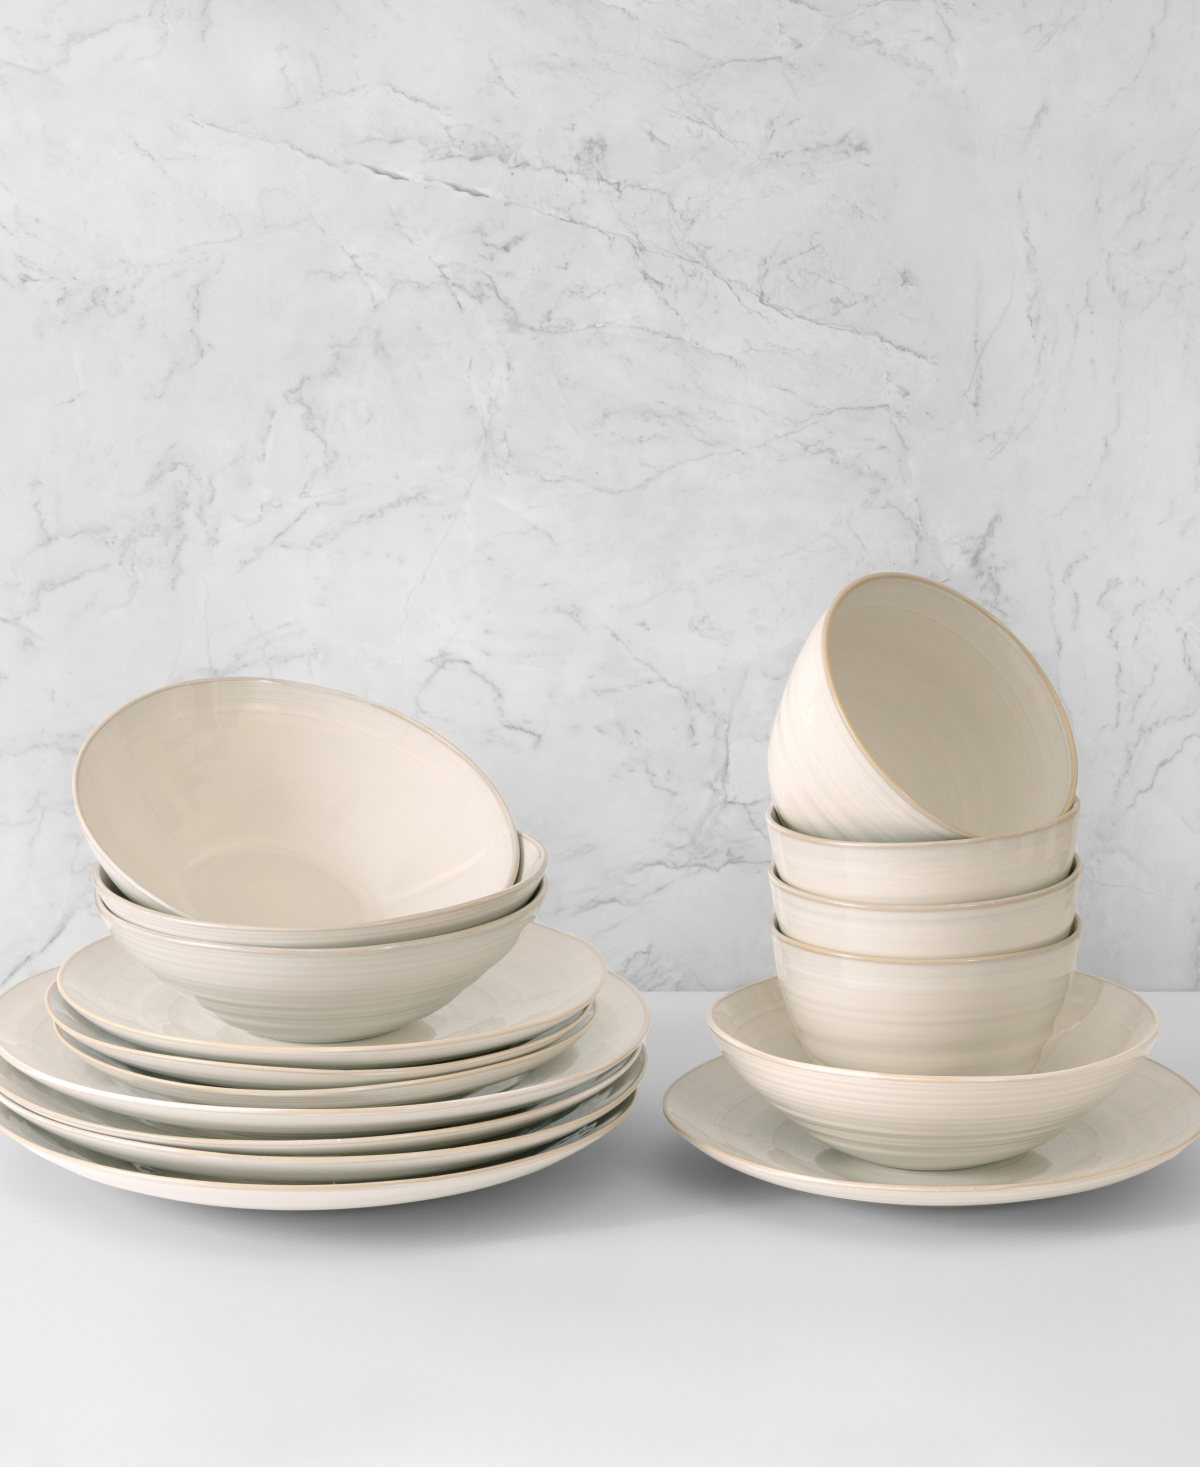 Neree 16 Piece Double Bowl Stoneware Reactive Glaze Dinnerware Set, Service for 4 - Ivory